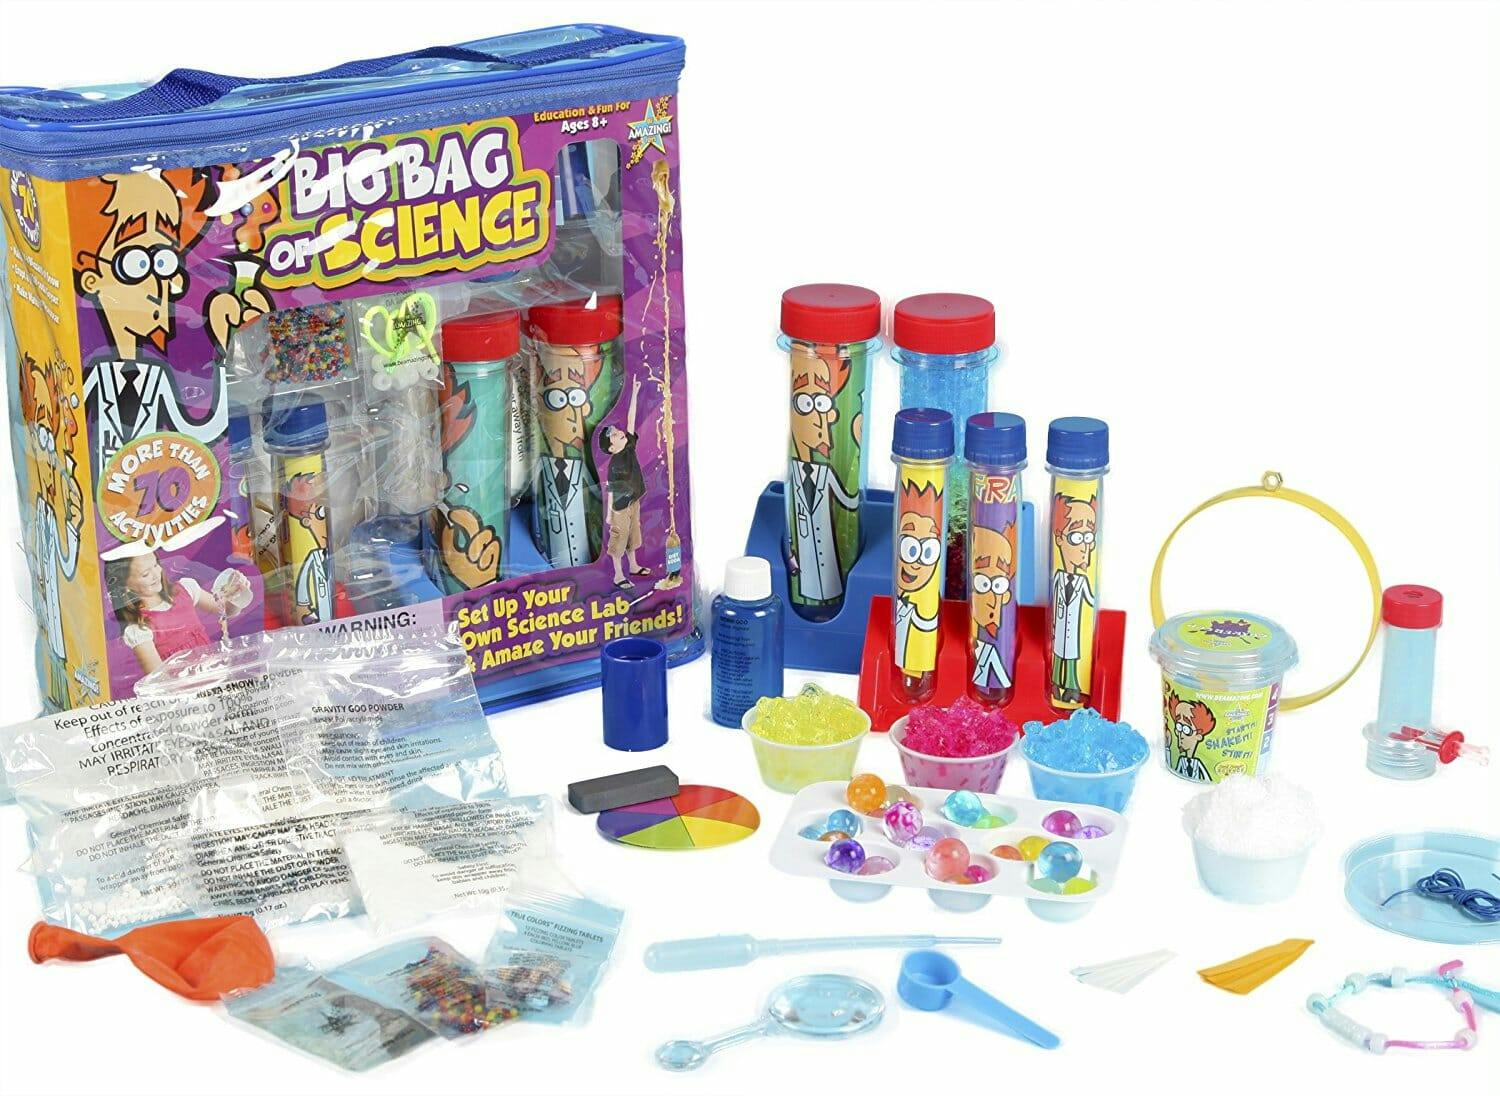 Top STEM Toys - The Stem Laboratory